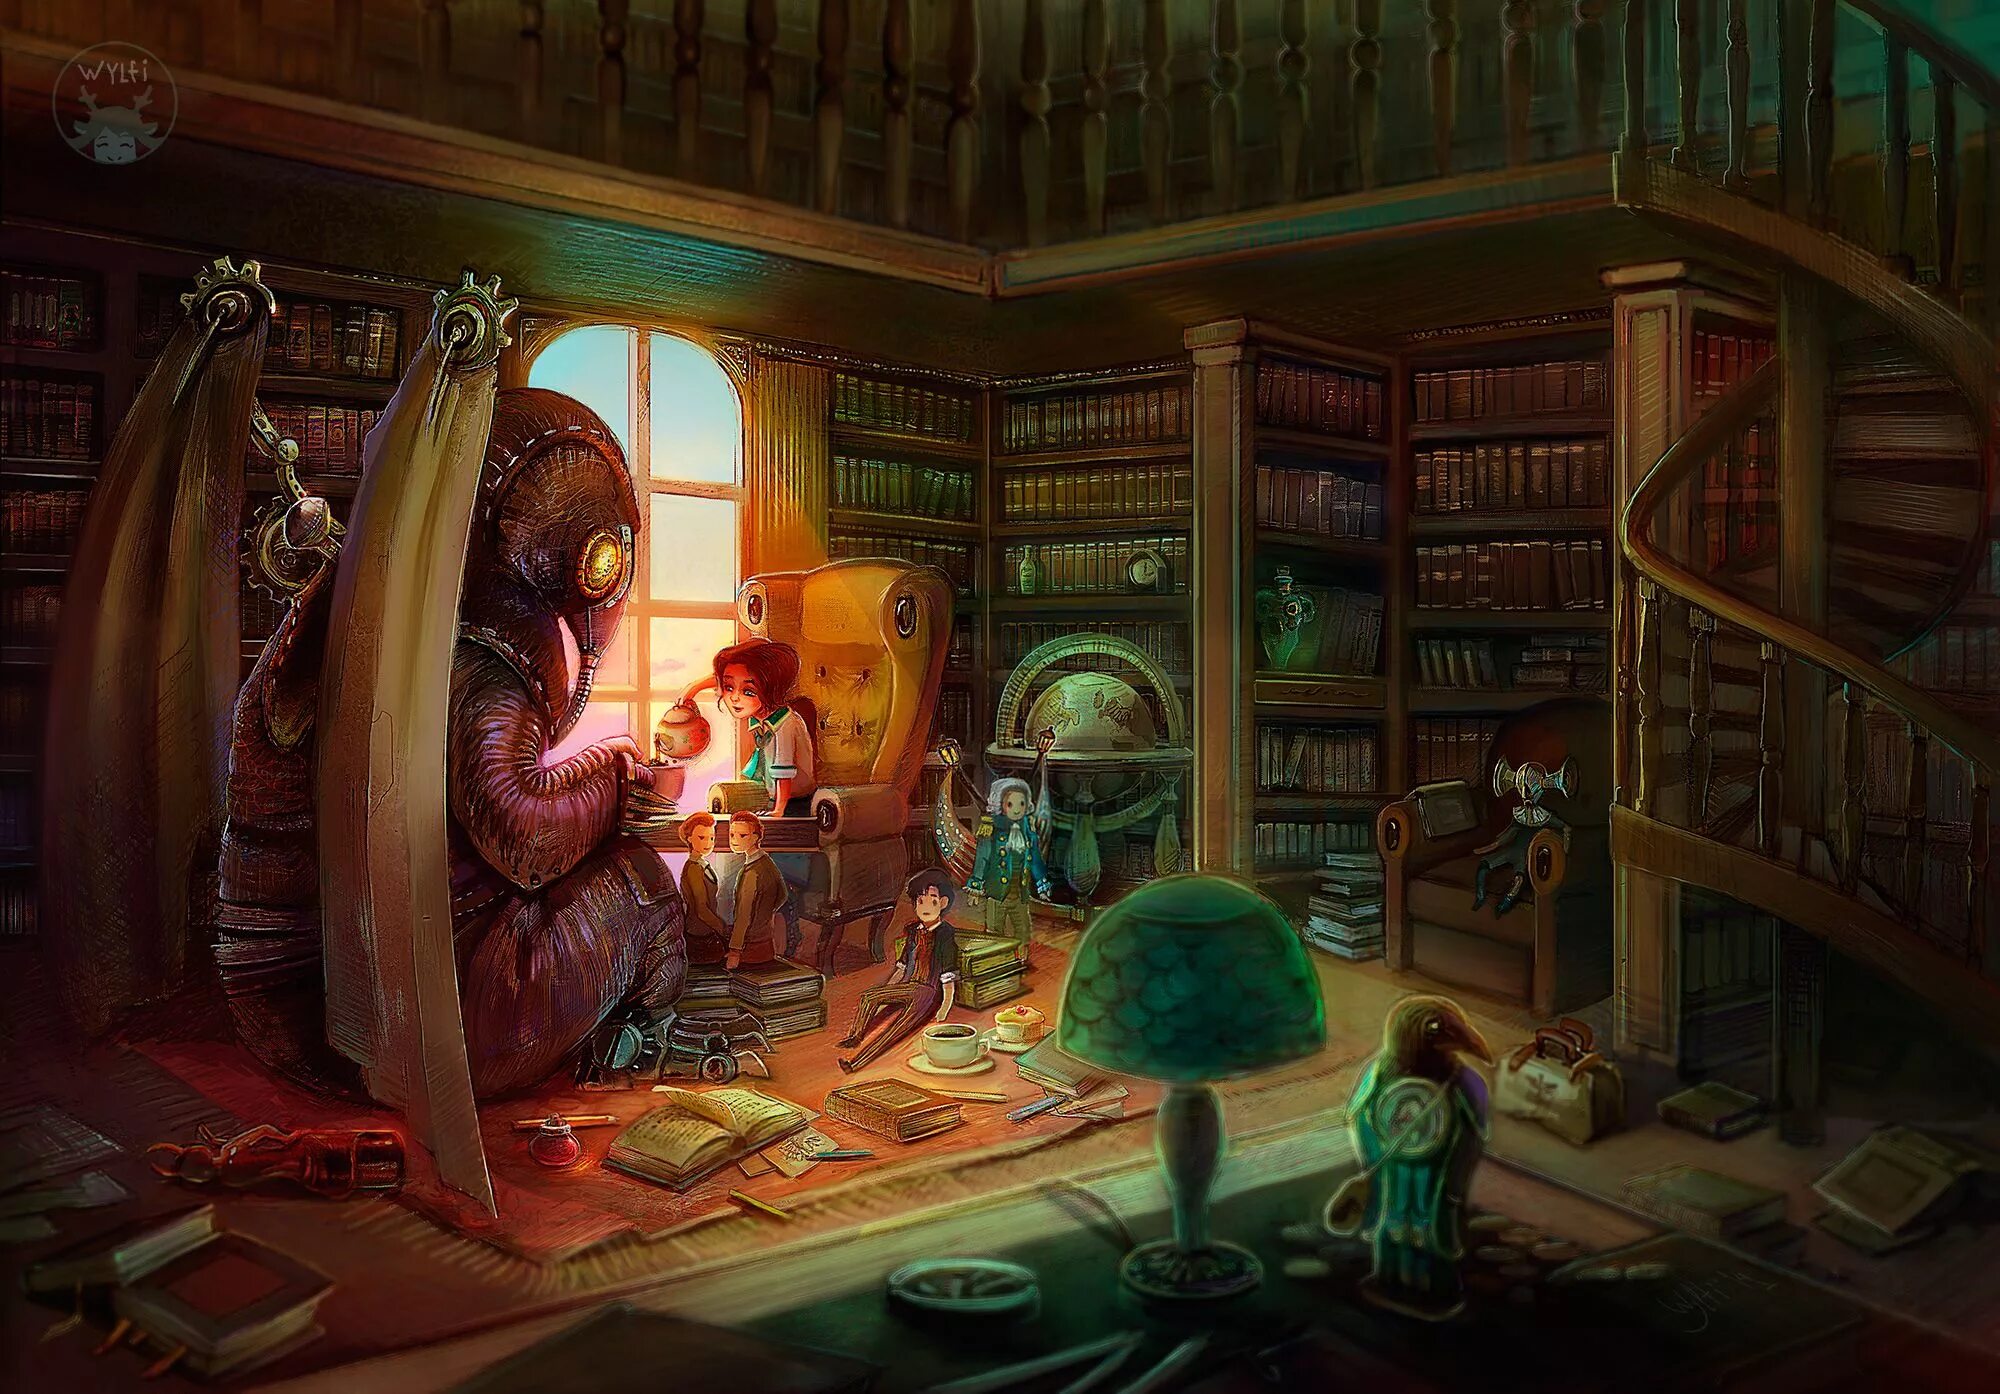 Fantasy worlds электронная библиотека. Сказочная комната. Сказочная библиотека. Библиотека арт. Библиотека фэнтези.